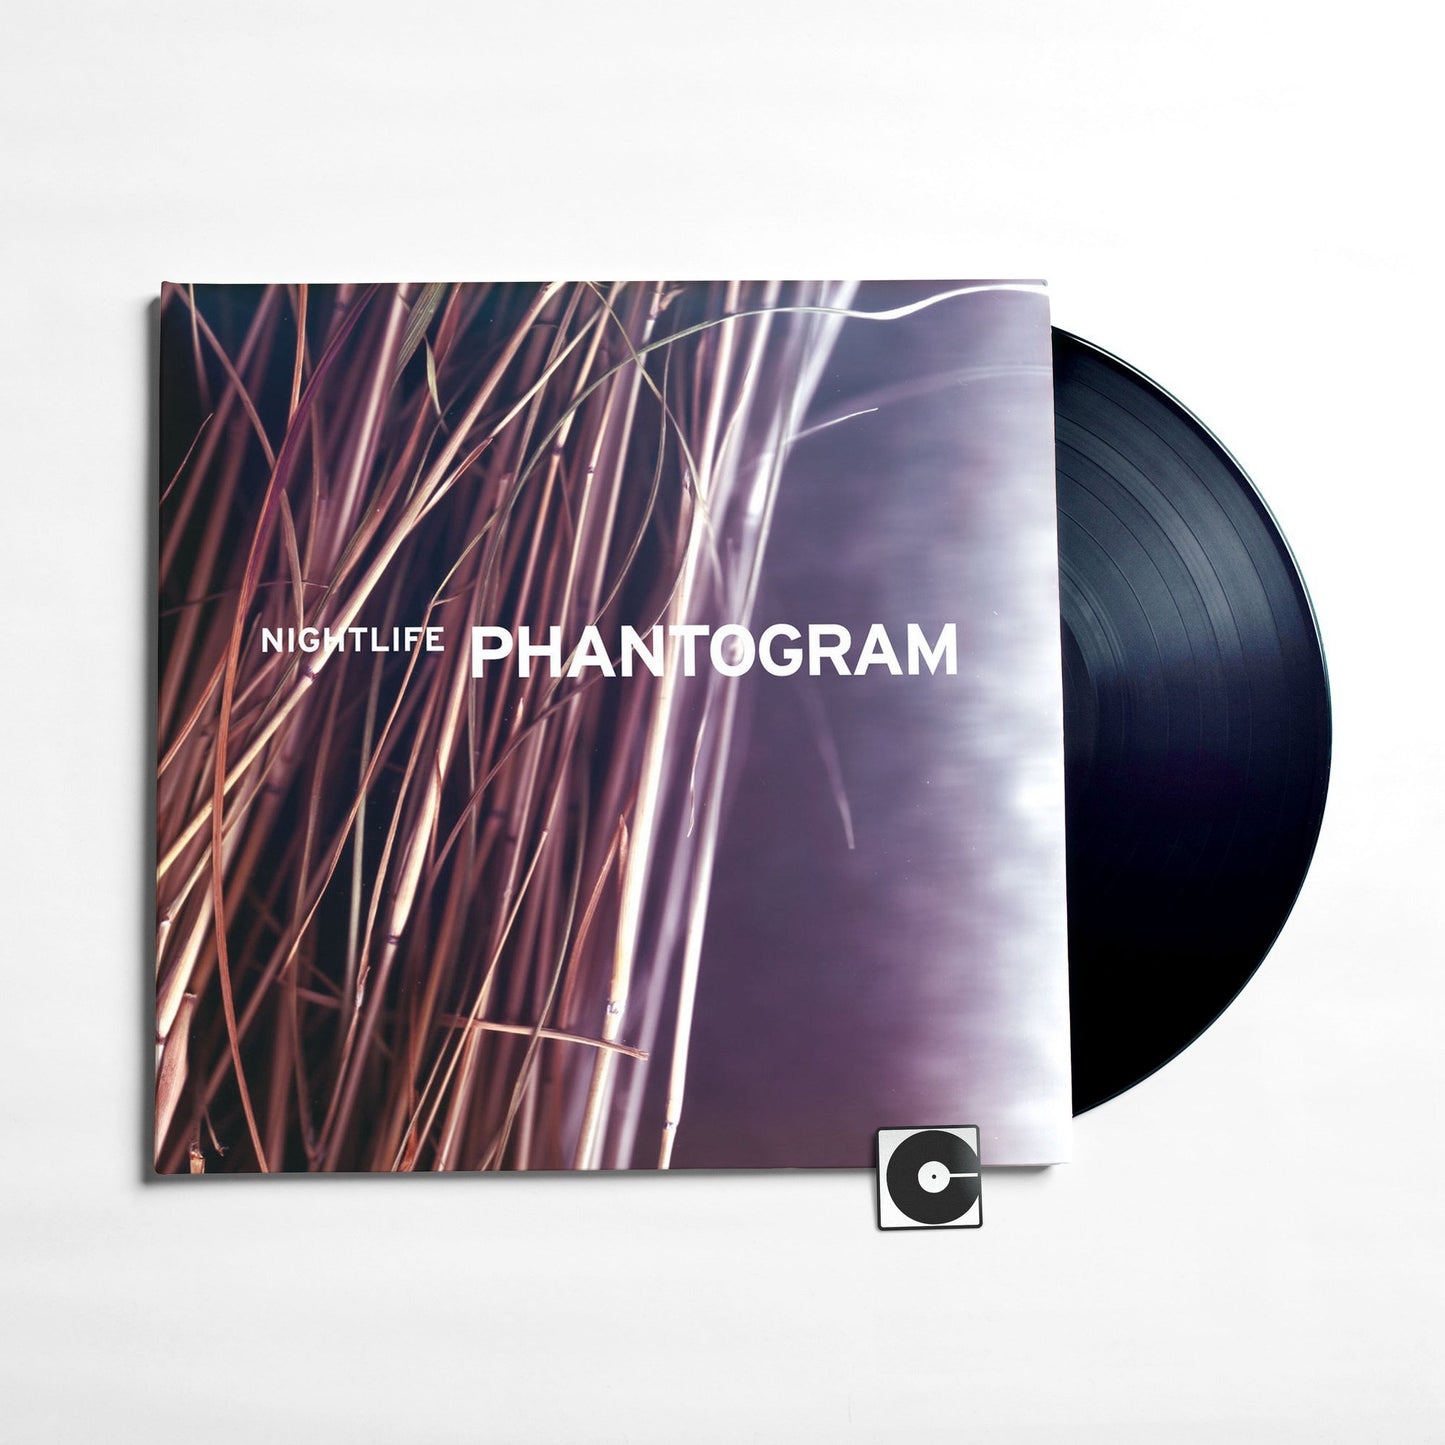 Phantogram - "Nightlife"